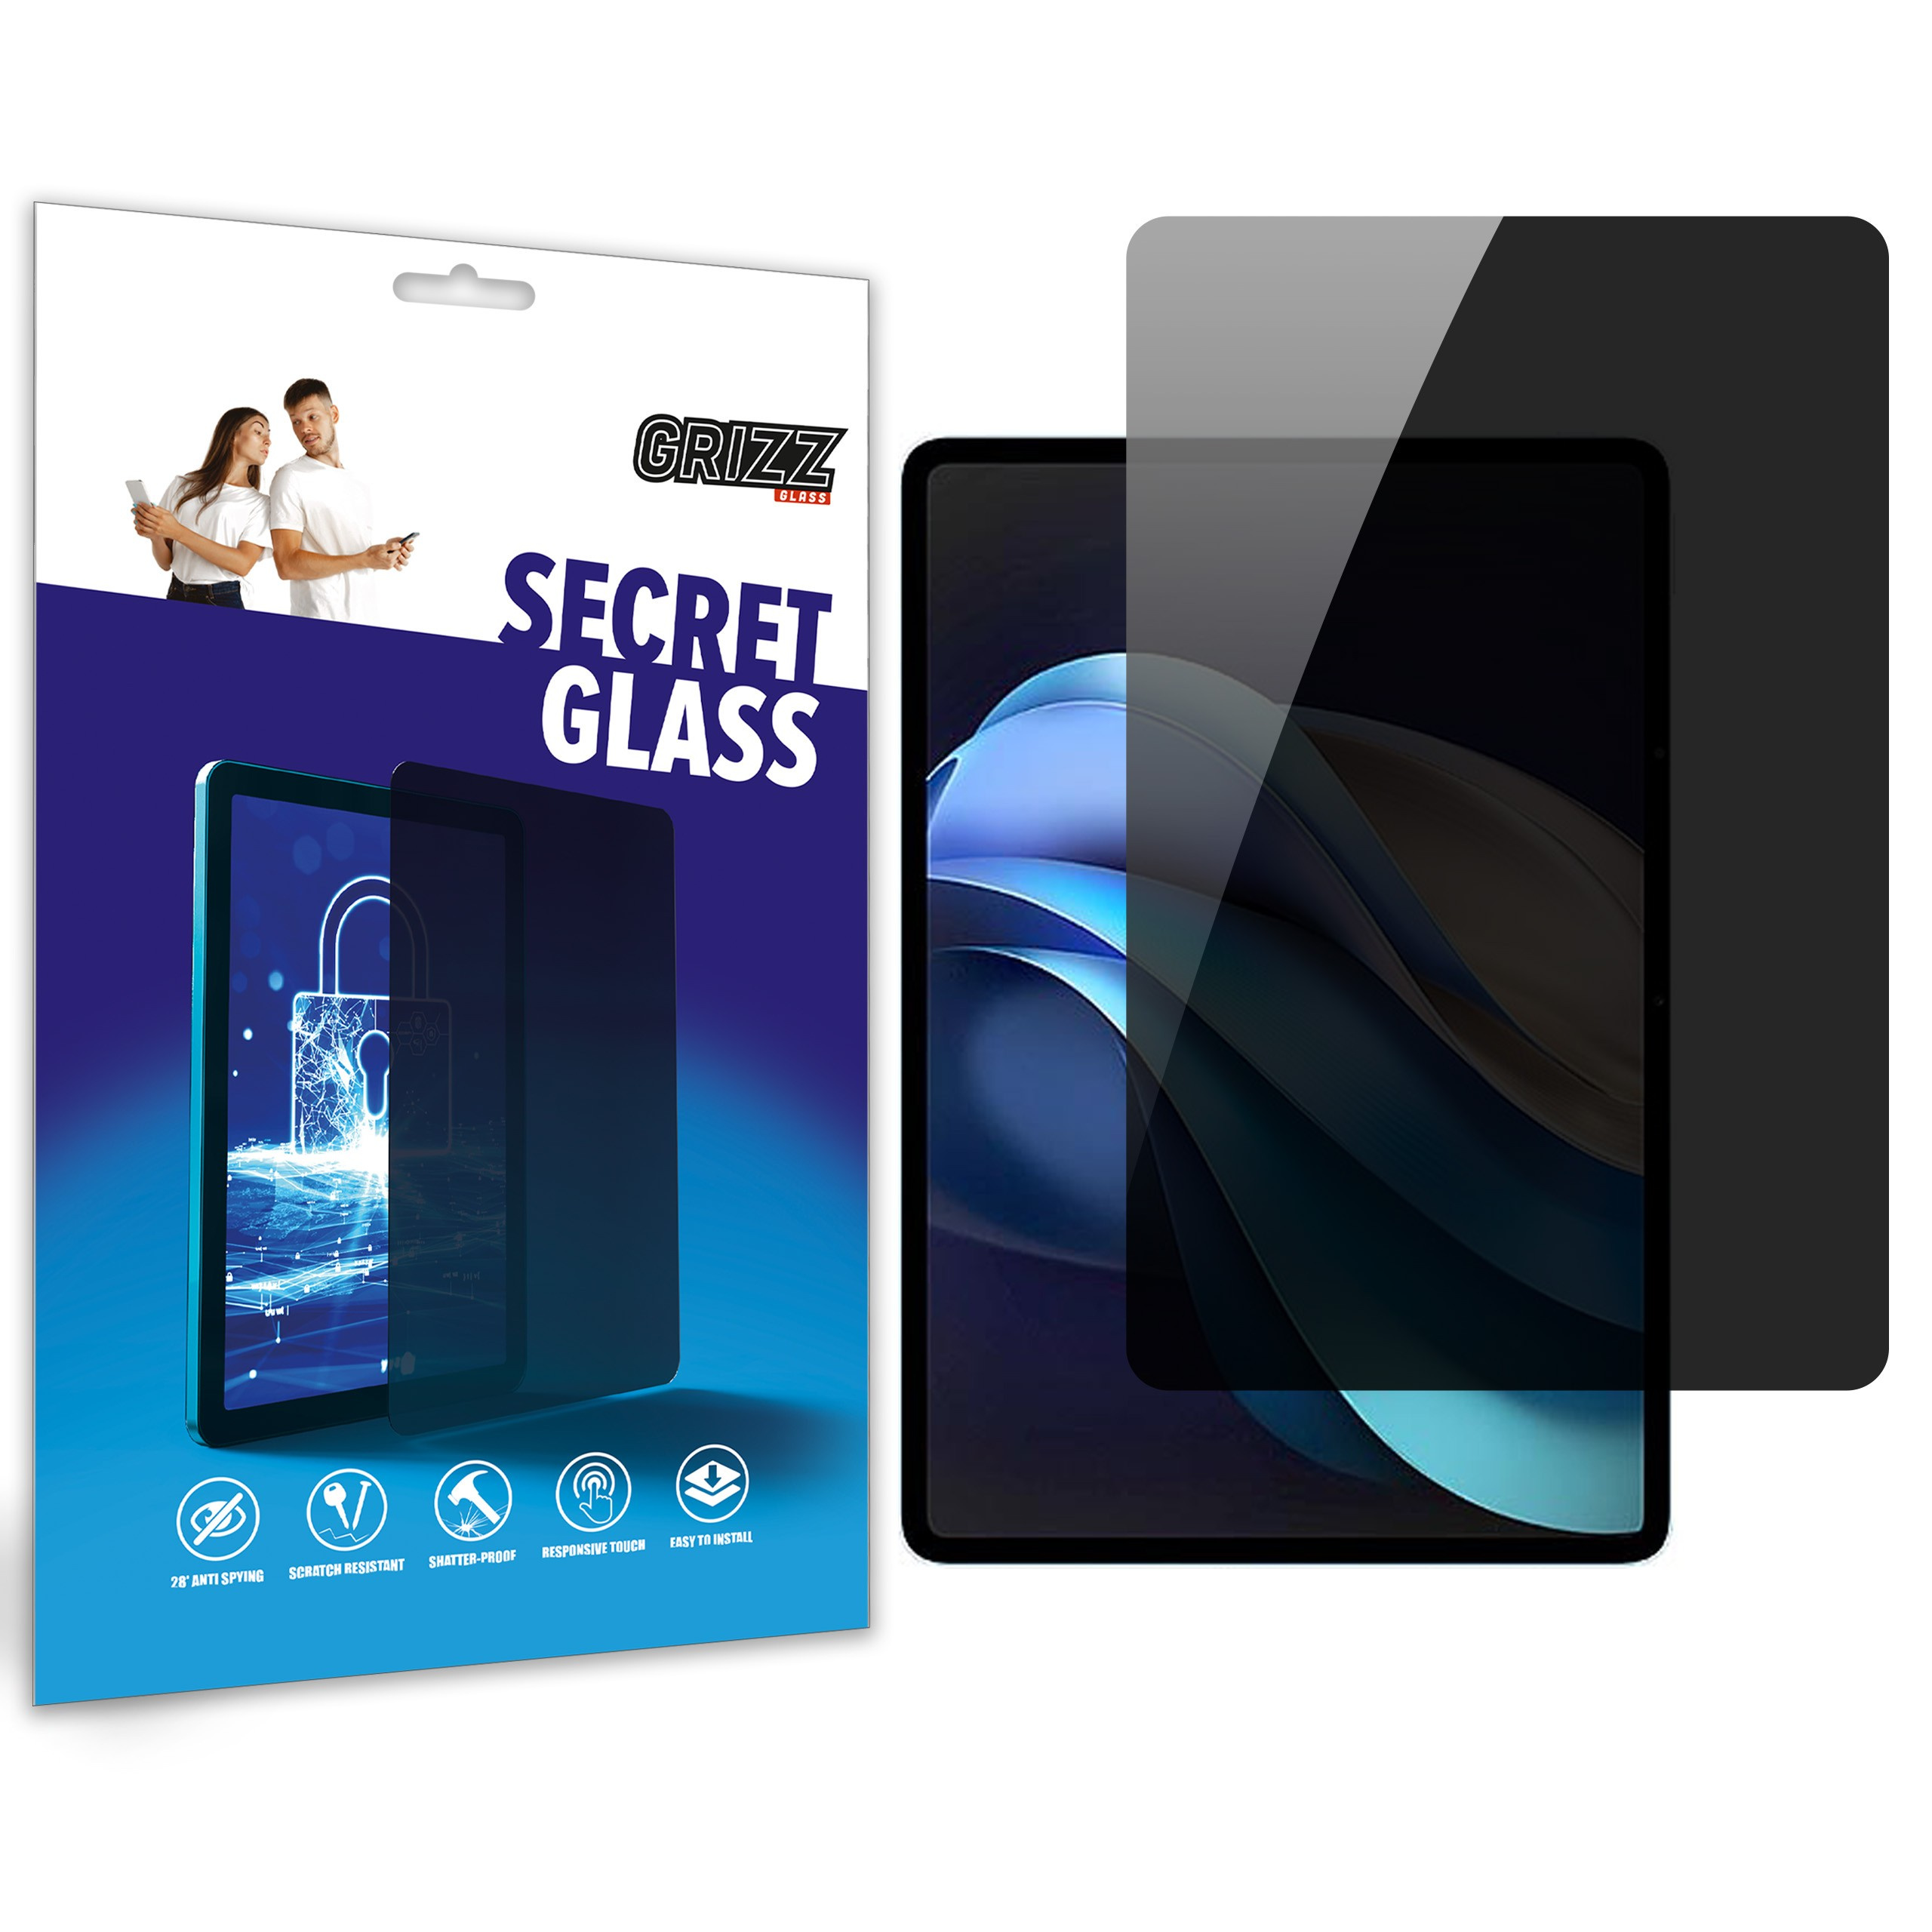 GrizzGlass SecretGlass Vivo Pad 3 Pro